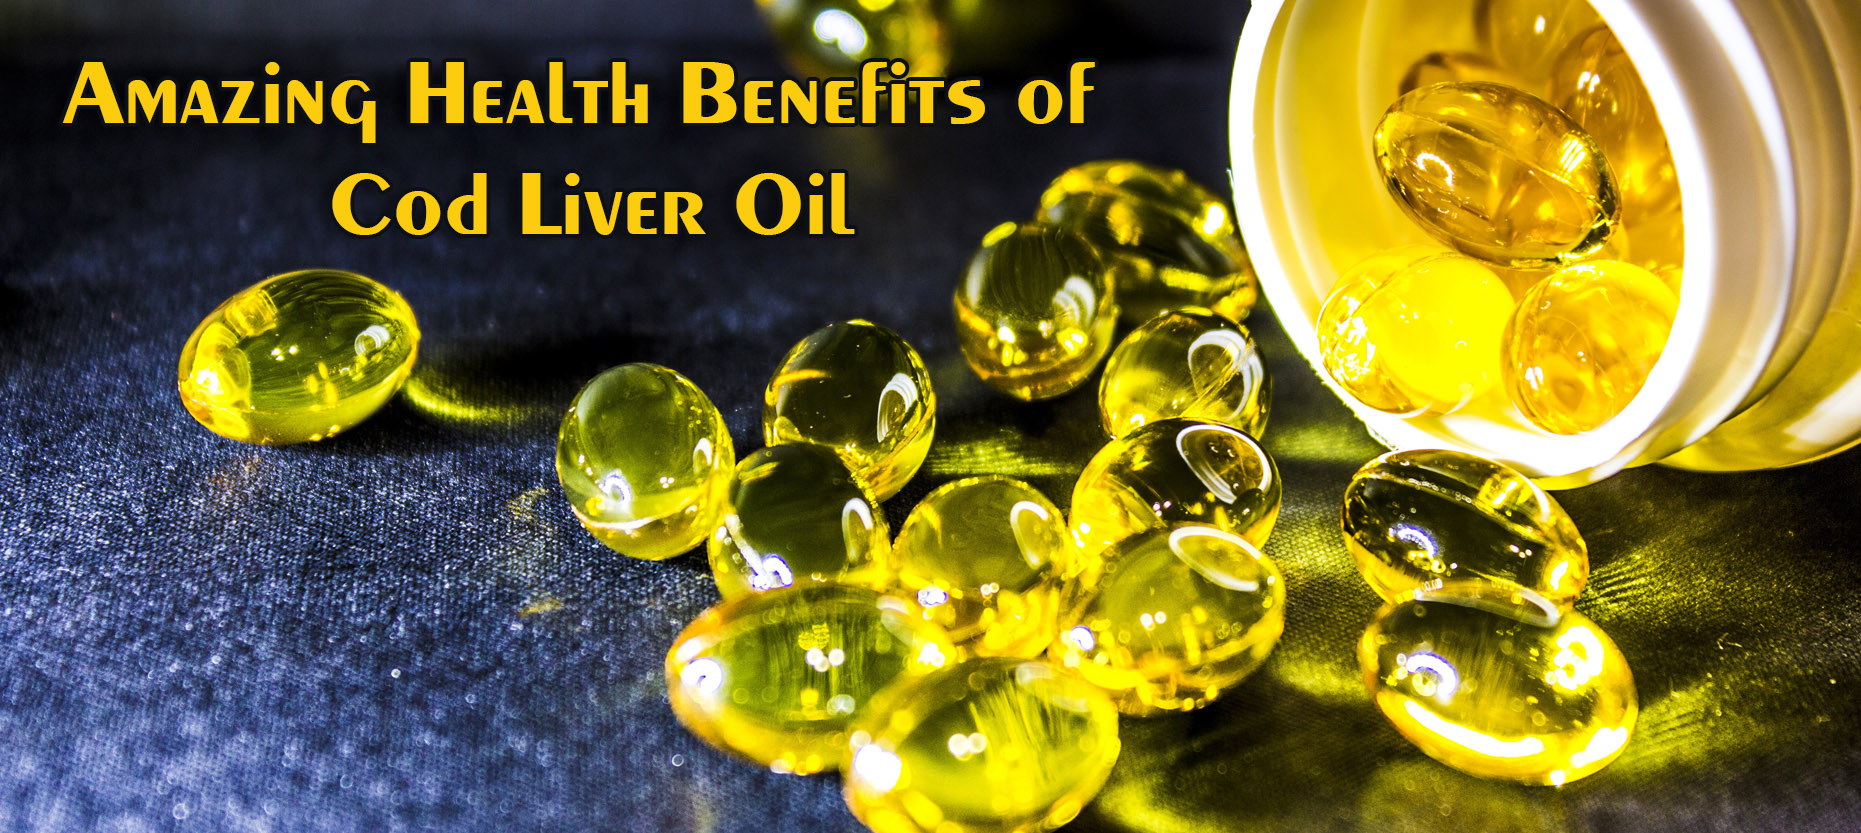 Amazing Health Benefits of Cod Liver Oil